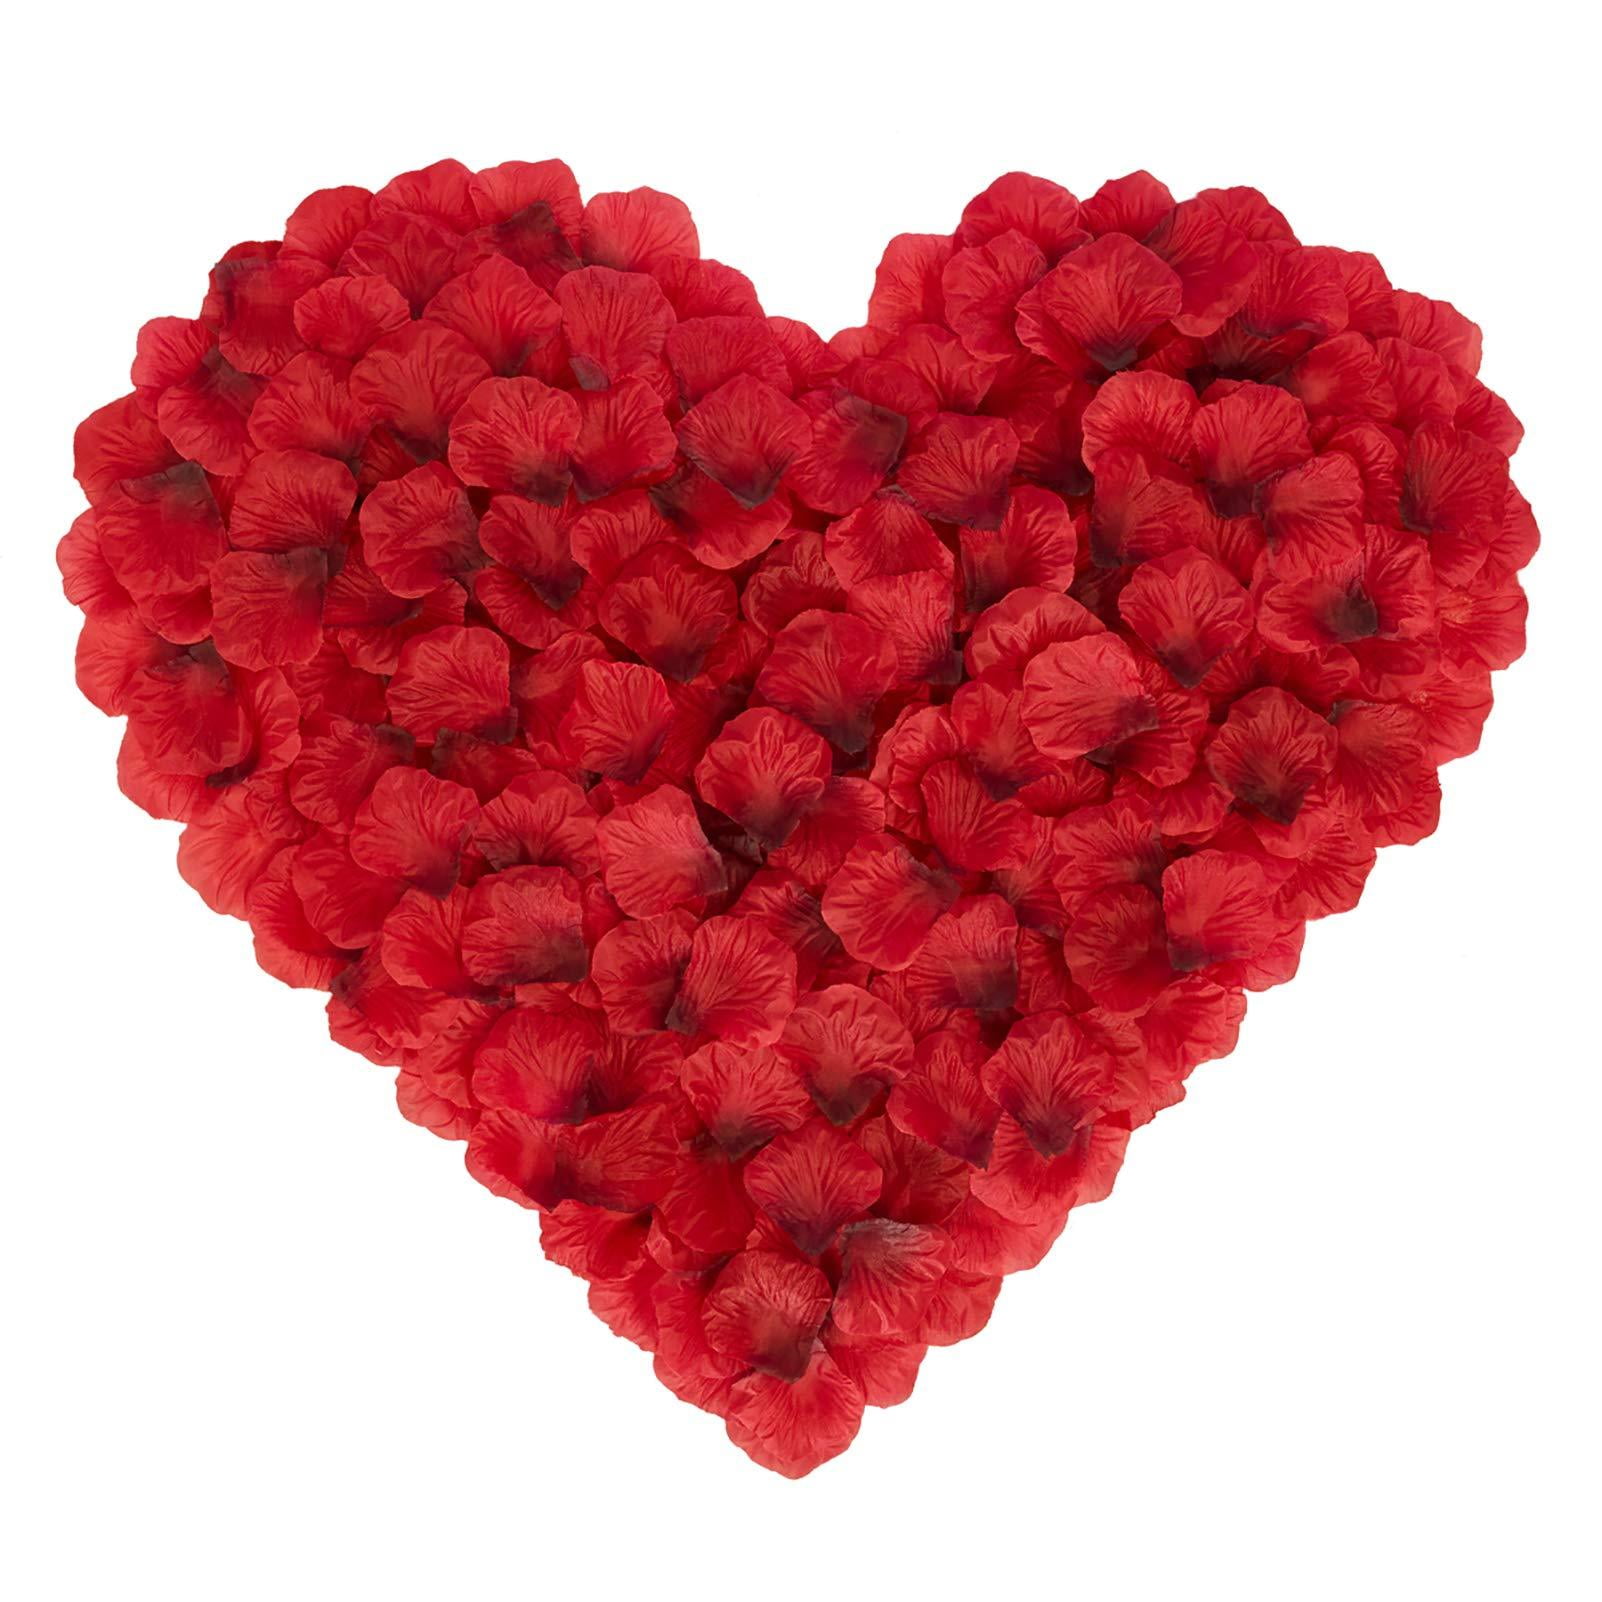 2000 Deep Red Silk Rose Petals Confetti Valentine Wedding Anniversary Decoration 